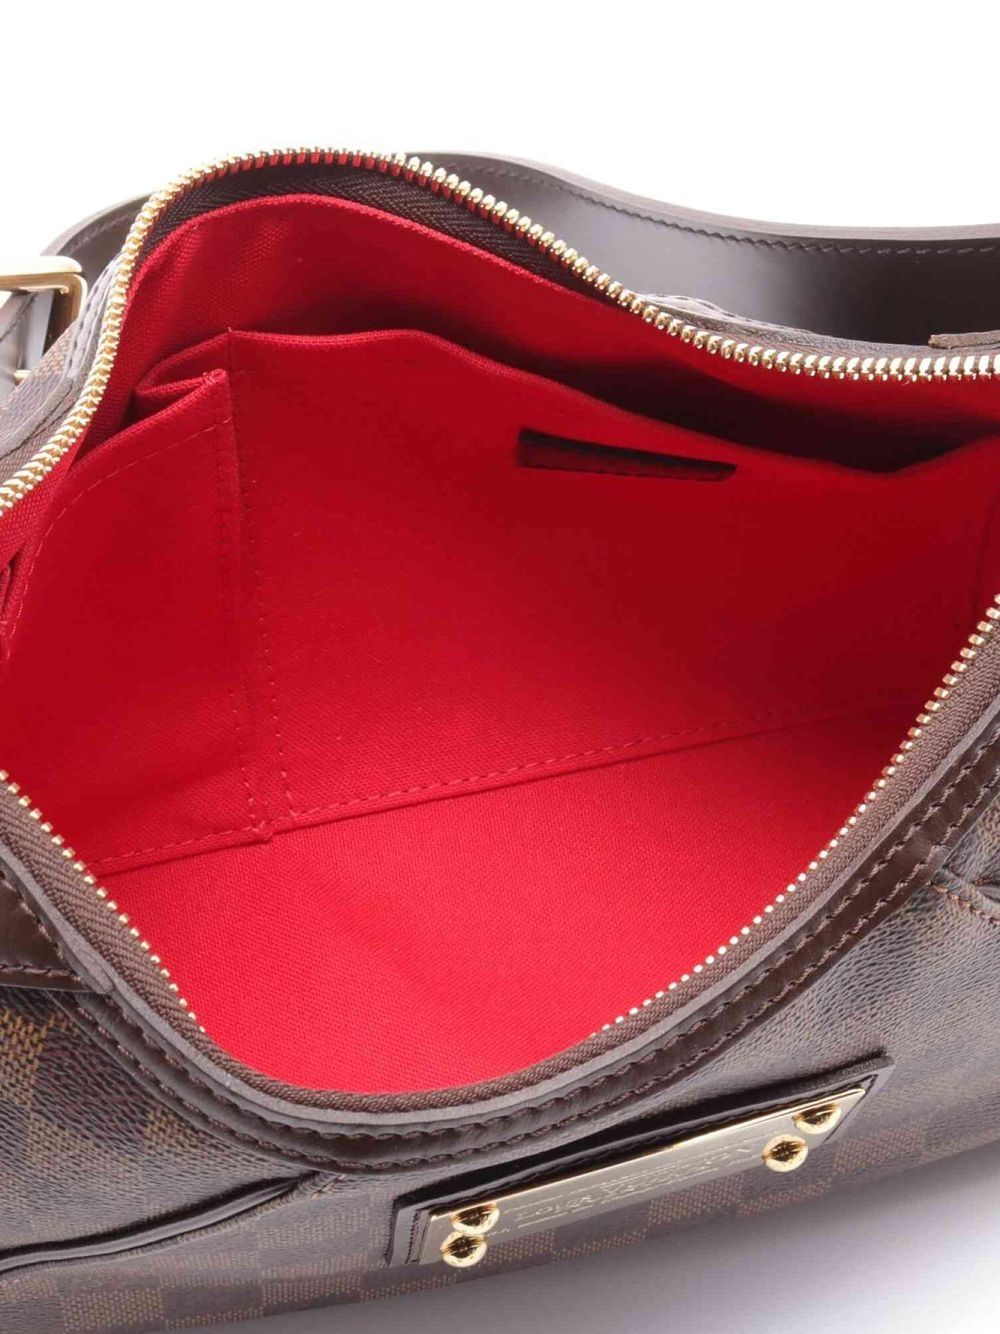 Louis Vuitton 2010 pre-owned Thames Handbag - Farfetch